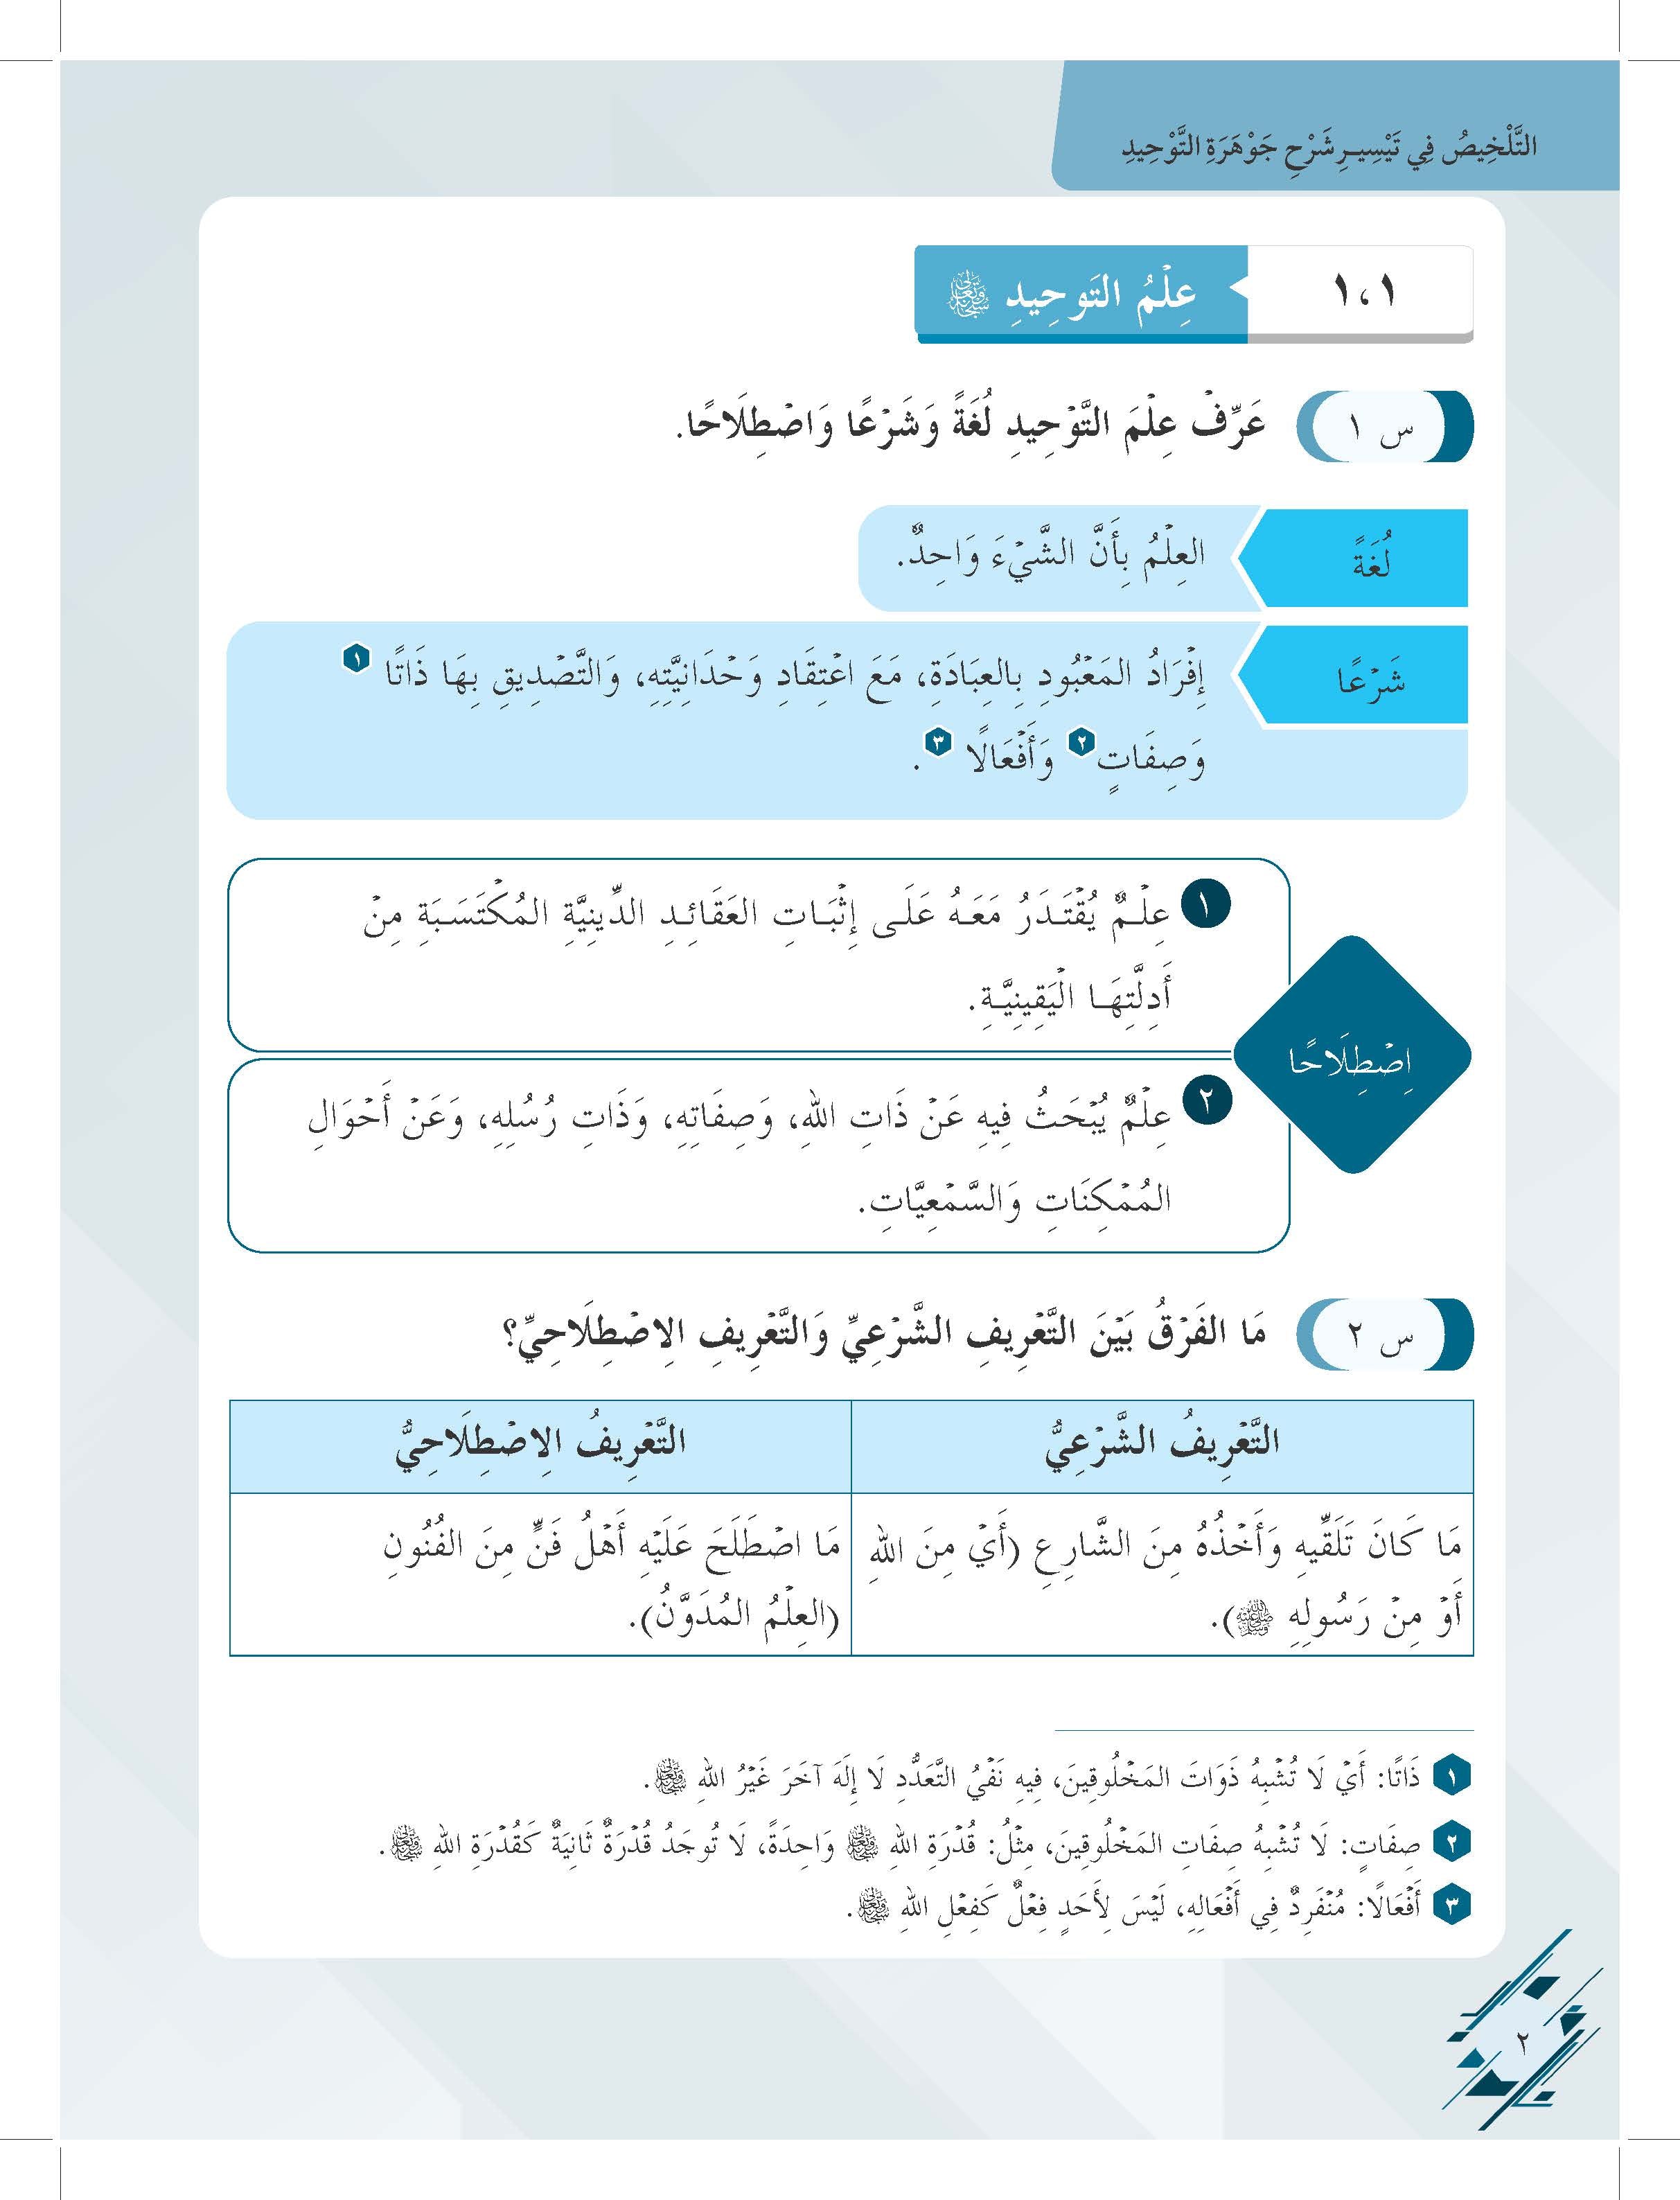 Mumtaz Dini Usuluddin Al-Talkhis Fi Taysir Syarh Jauharah Al-Tauhid Tingkatan 4 - (TBBS1321)